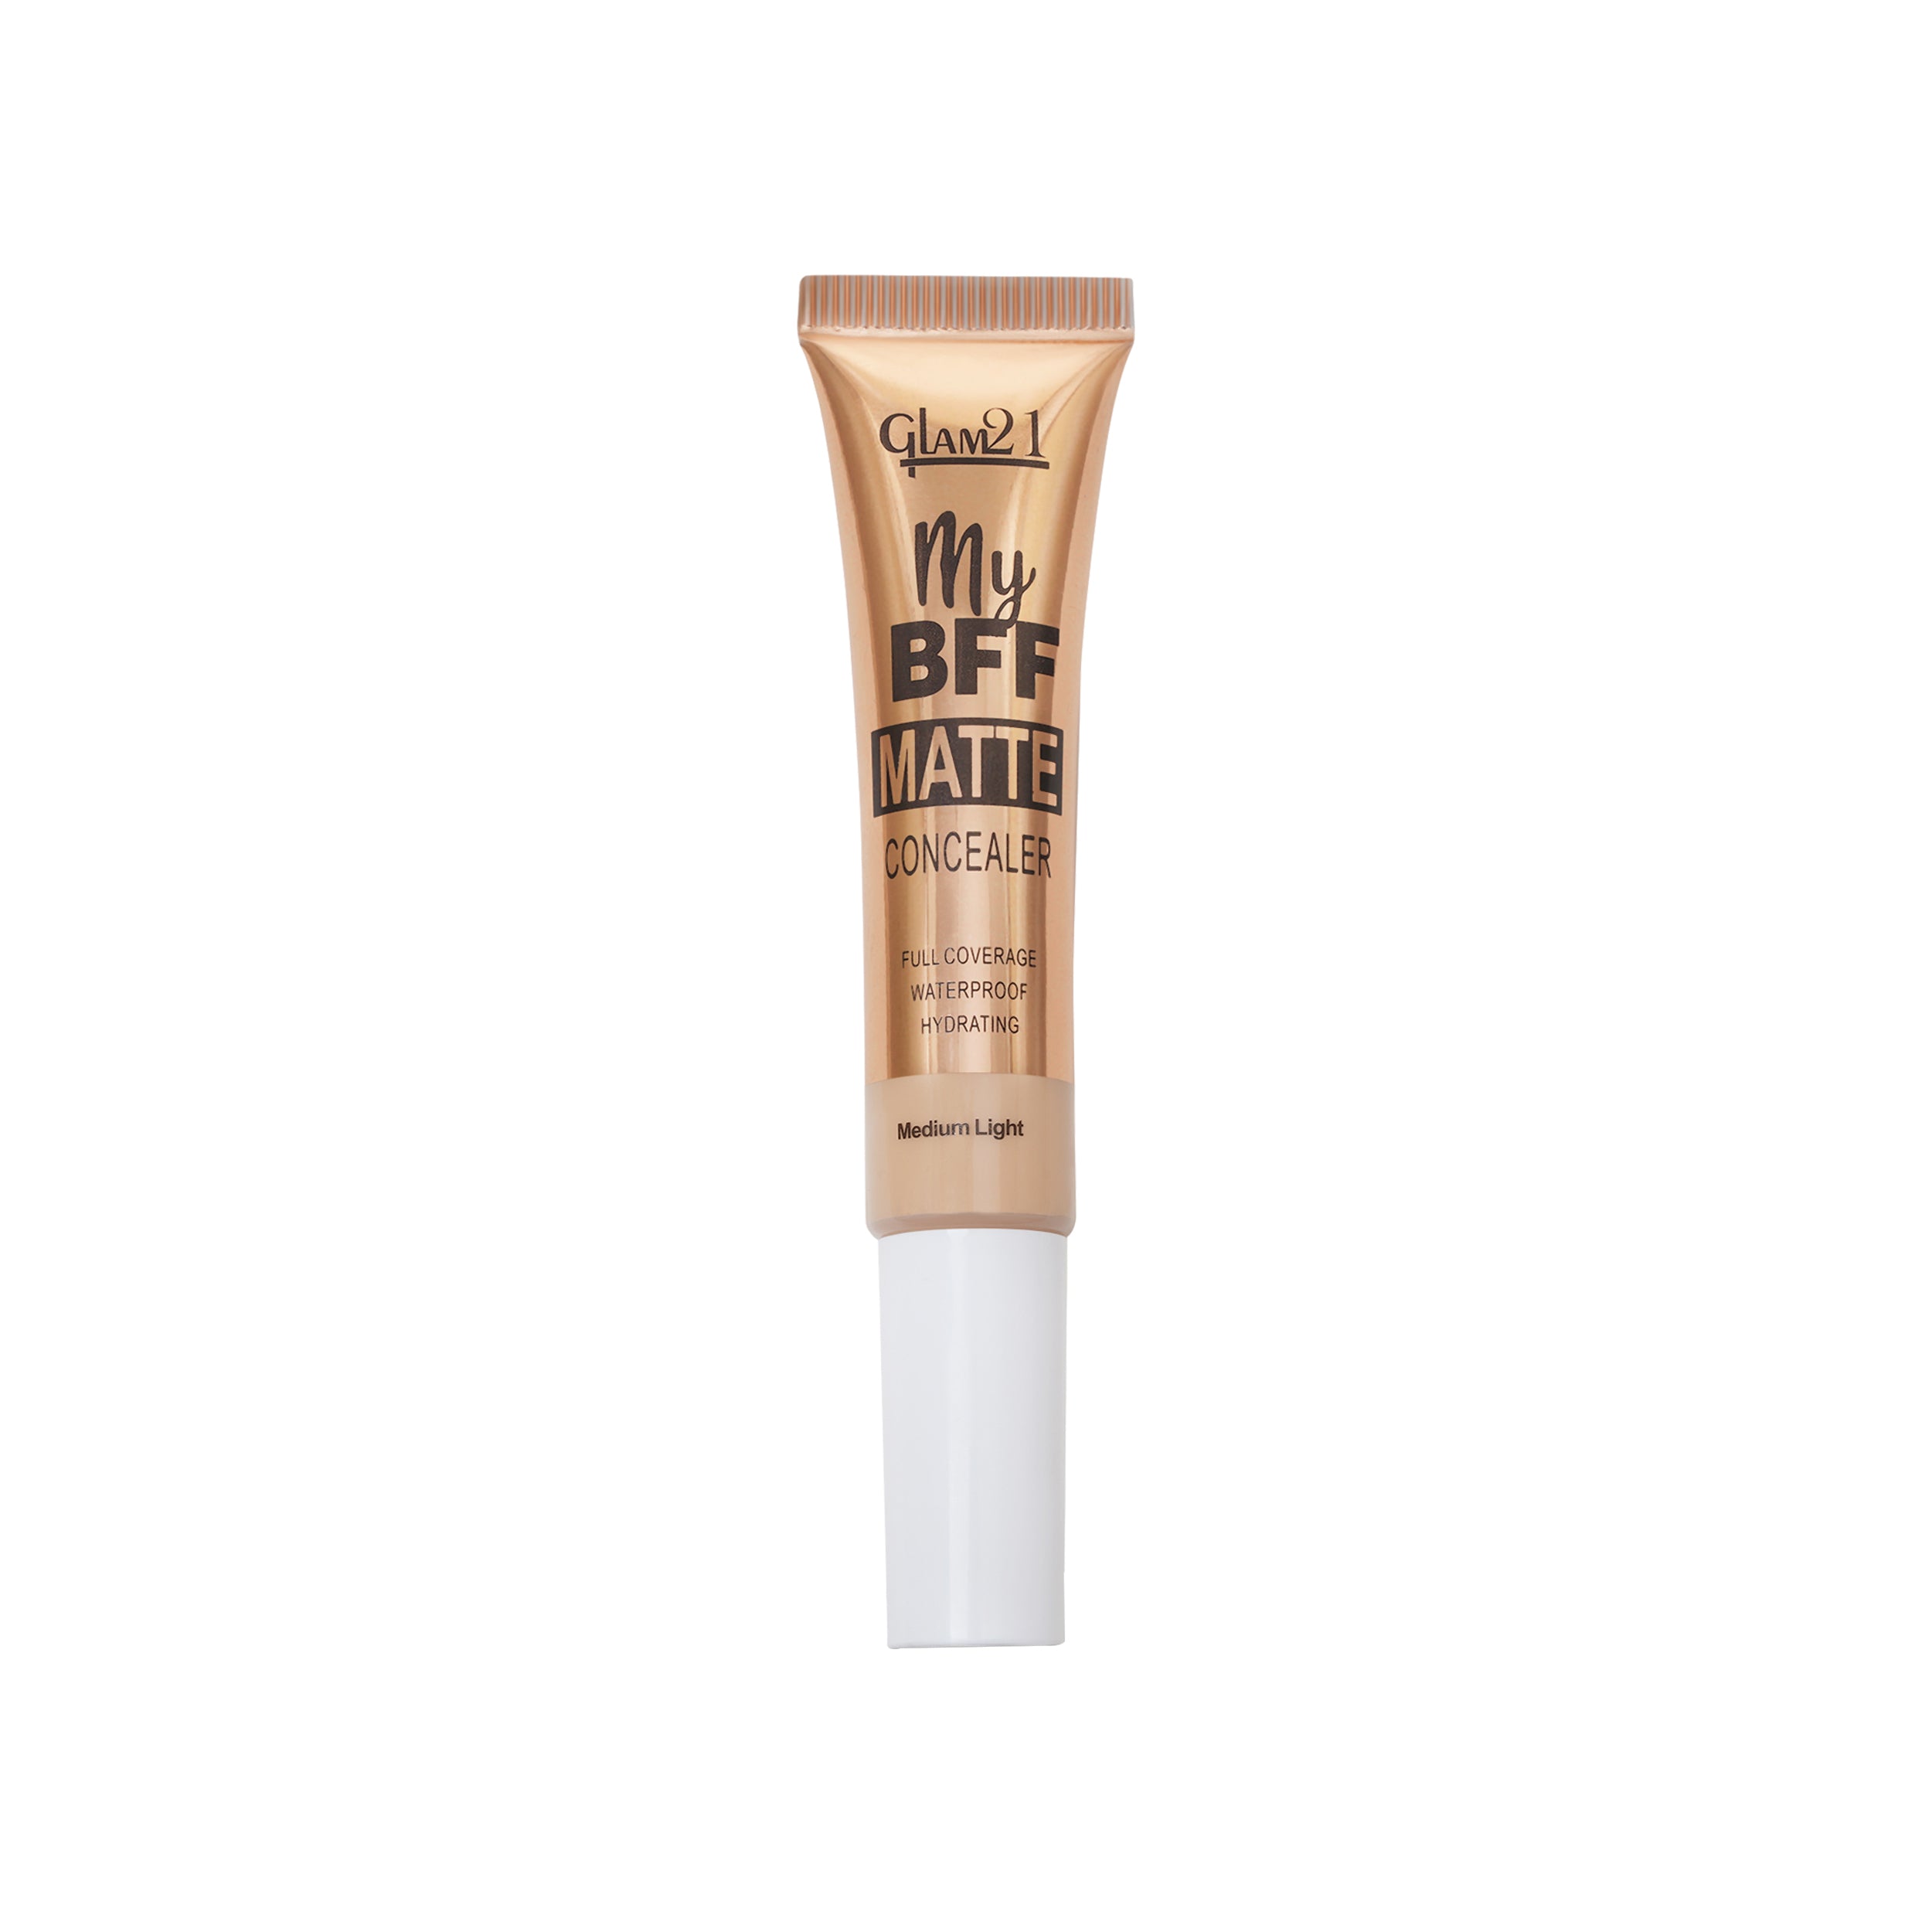 Glam21 My BFF Matte Liquid Concealer-Conceal,Contour,&Highlights Your Face|Matte Finish Concealer (Light, 8 g)